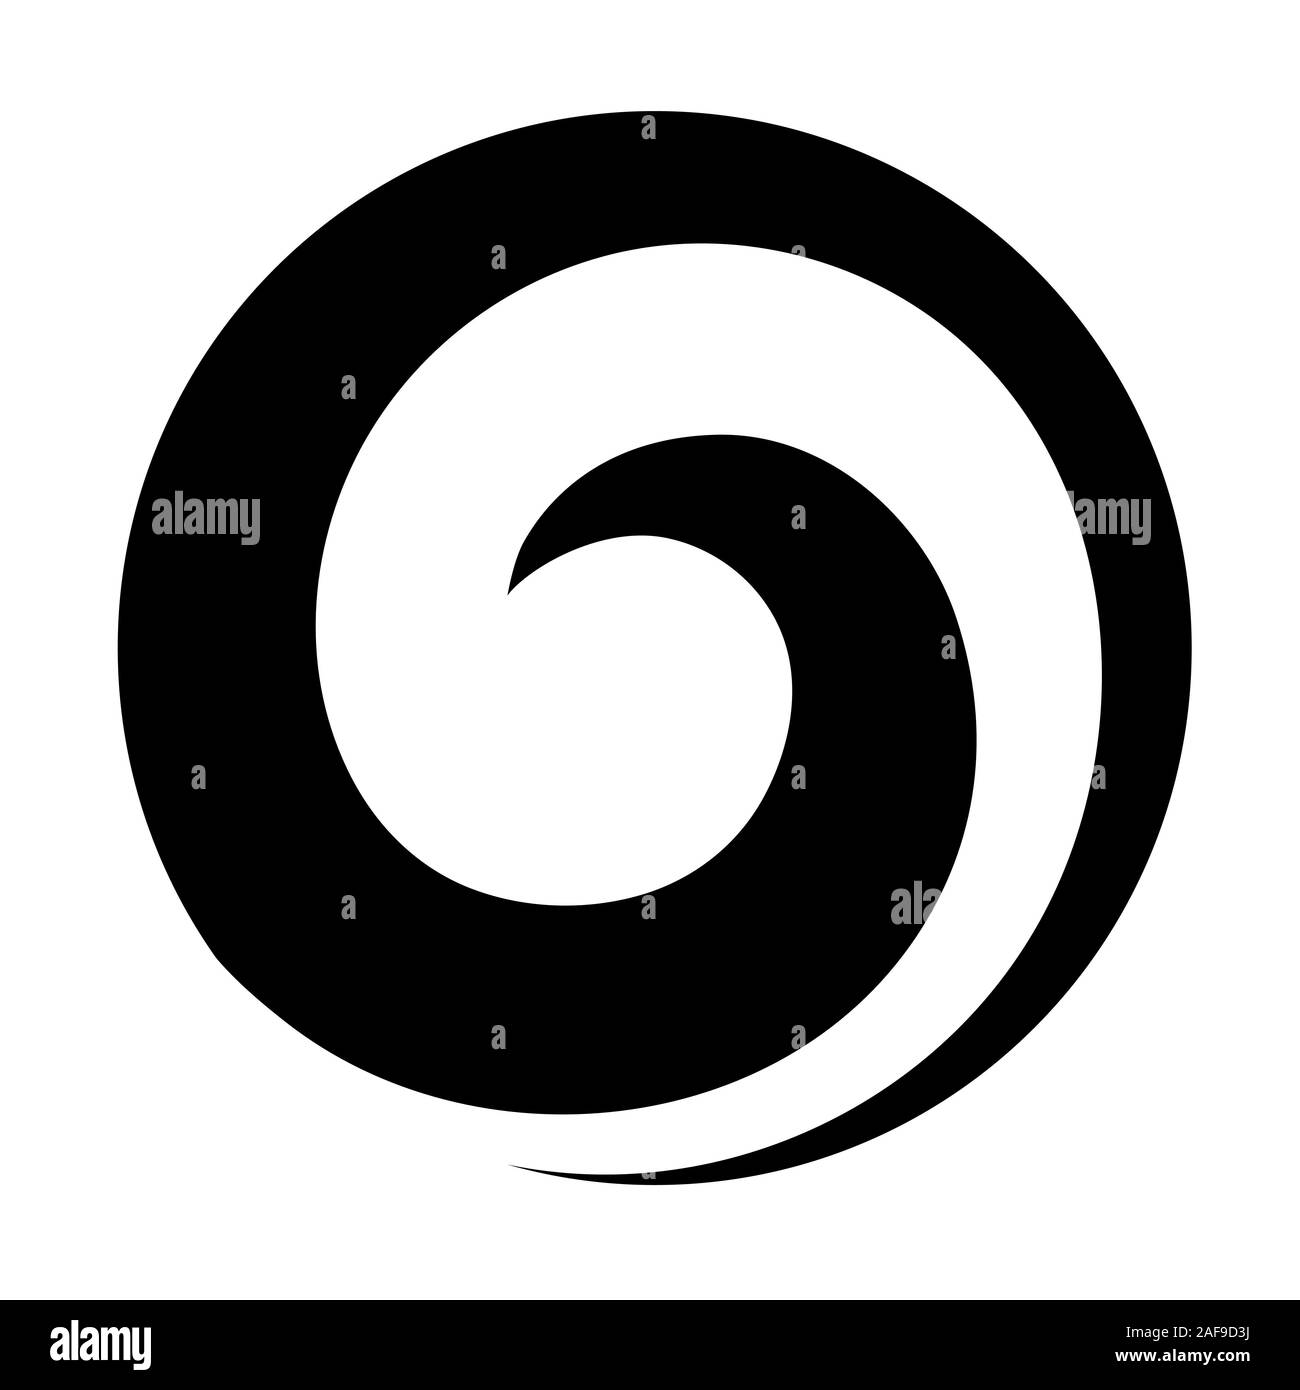 Maori koru spiral swirl for logo or icon in black New Zealand Kiwiana style Stock Vector